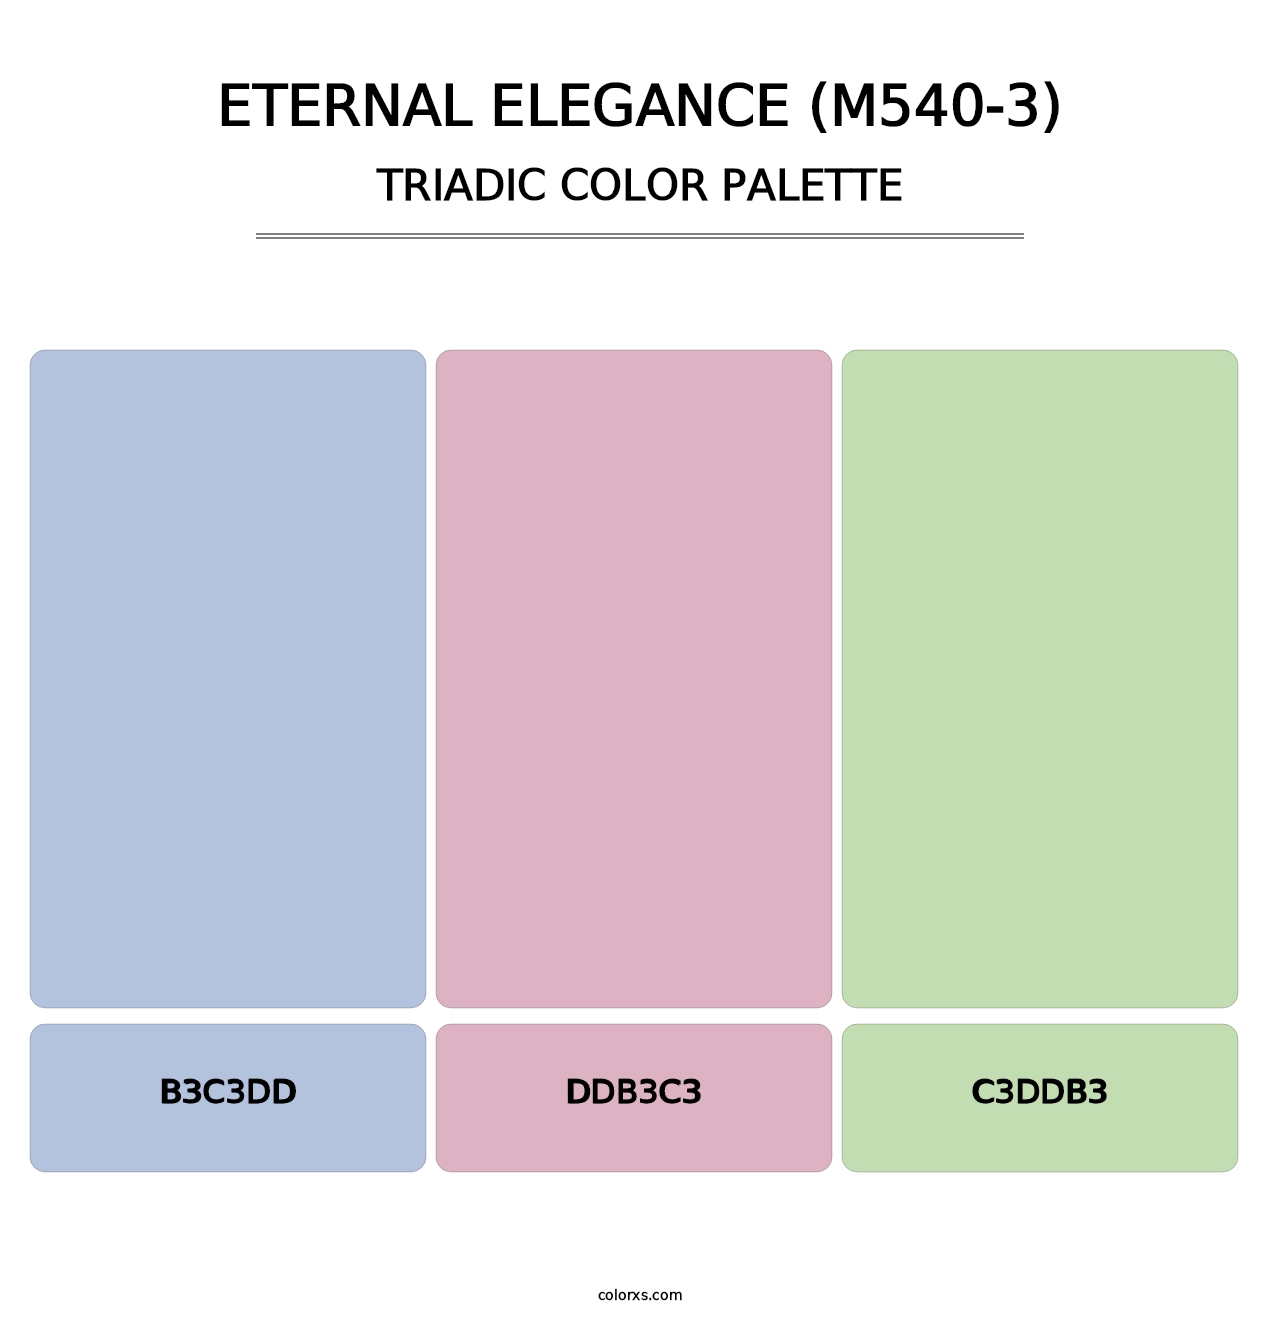 Eternal Elegance (M540-3) - Triadic Color Palette